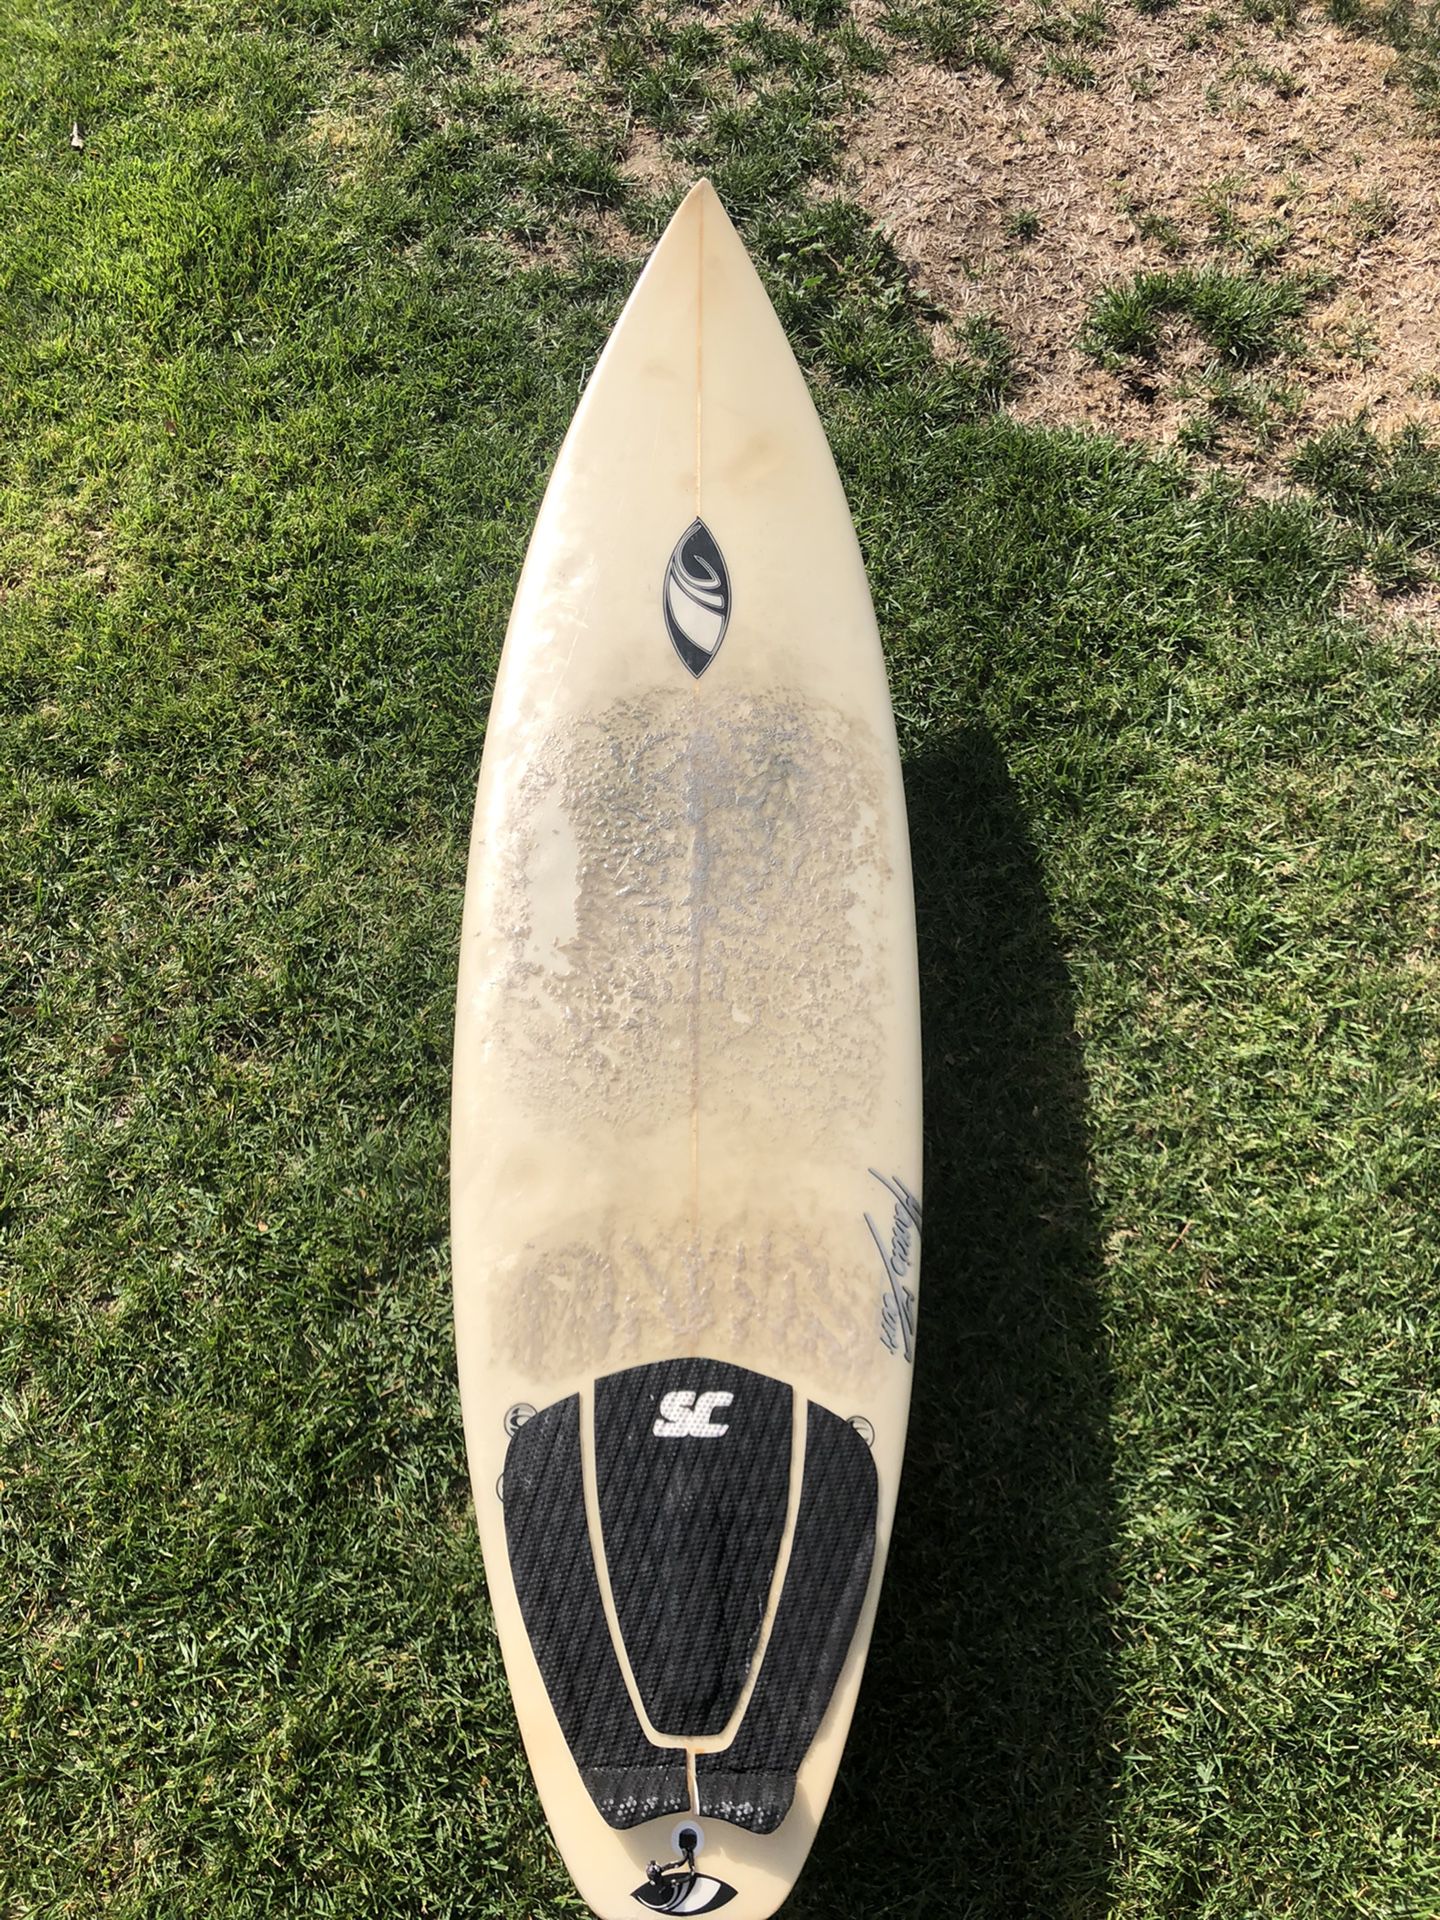 Sharp Eye Surfboards - 6’1” Thruster